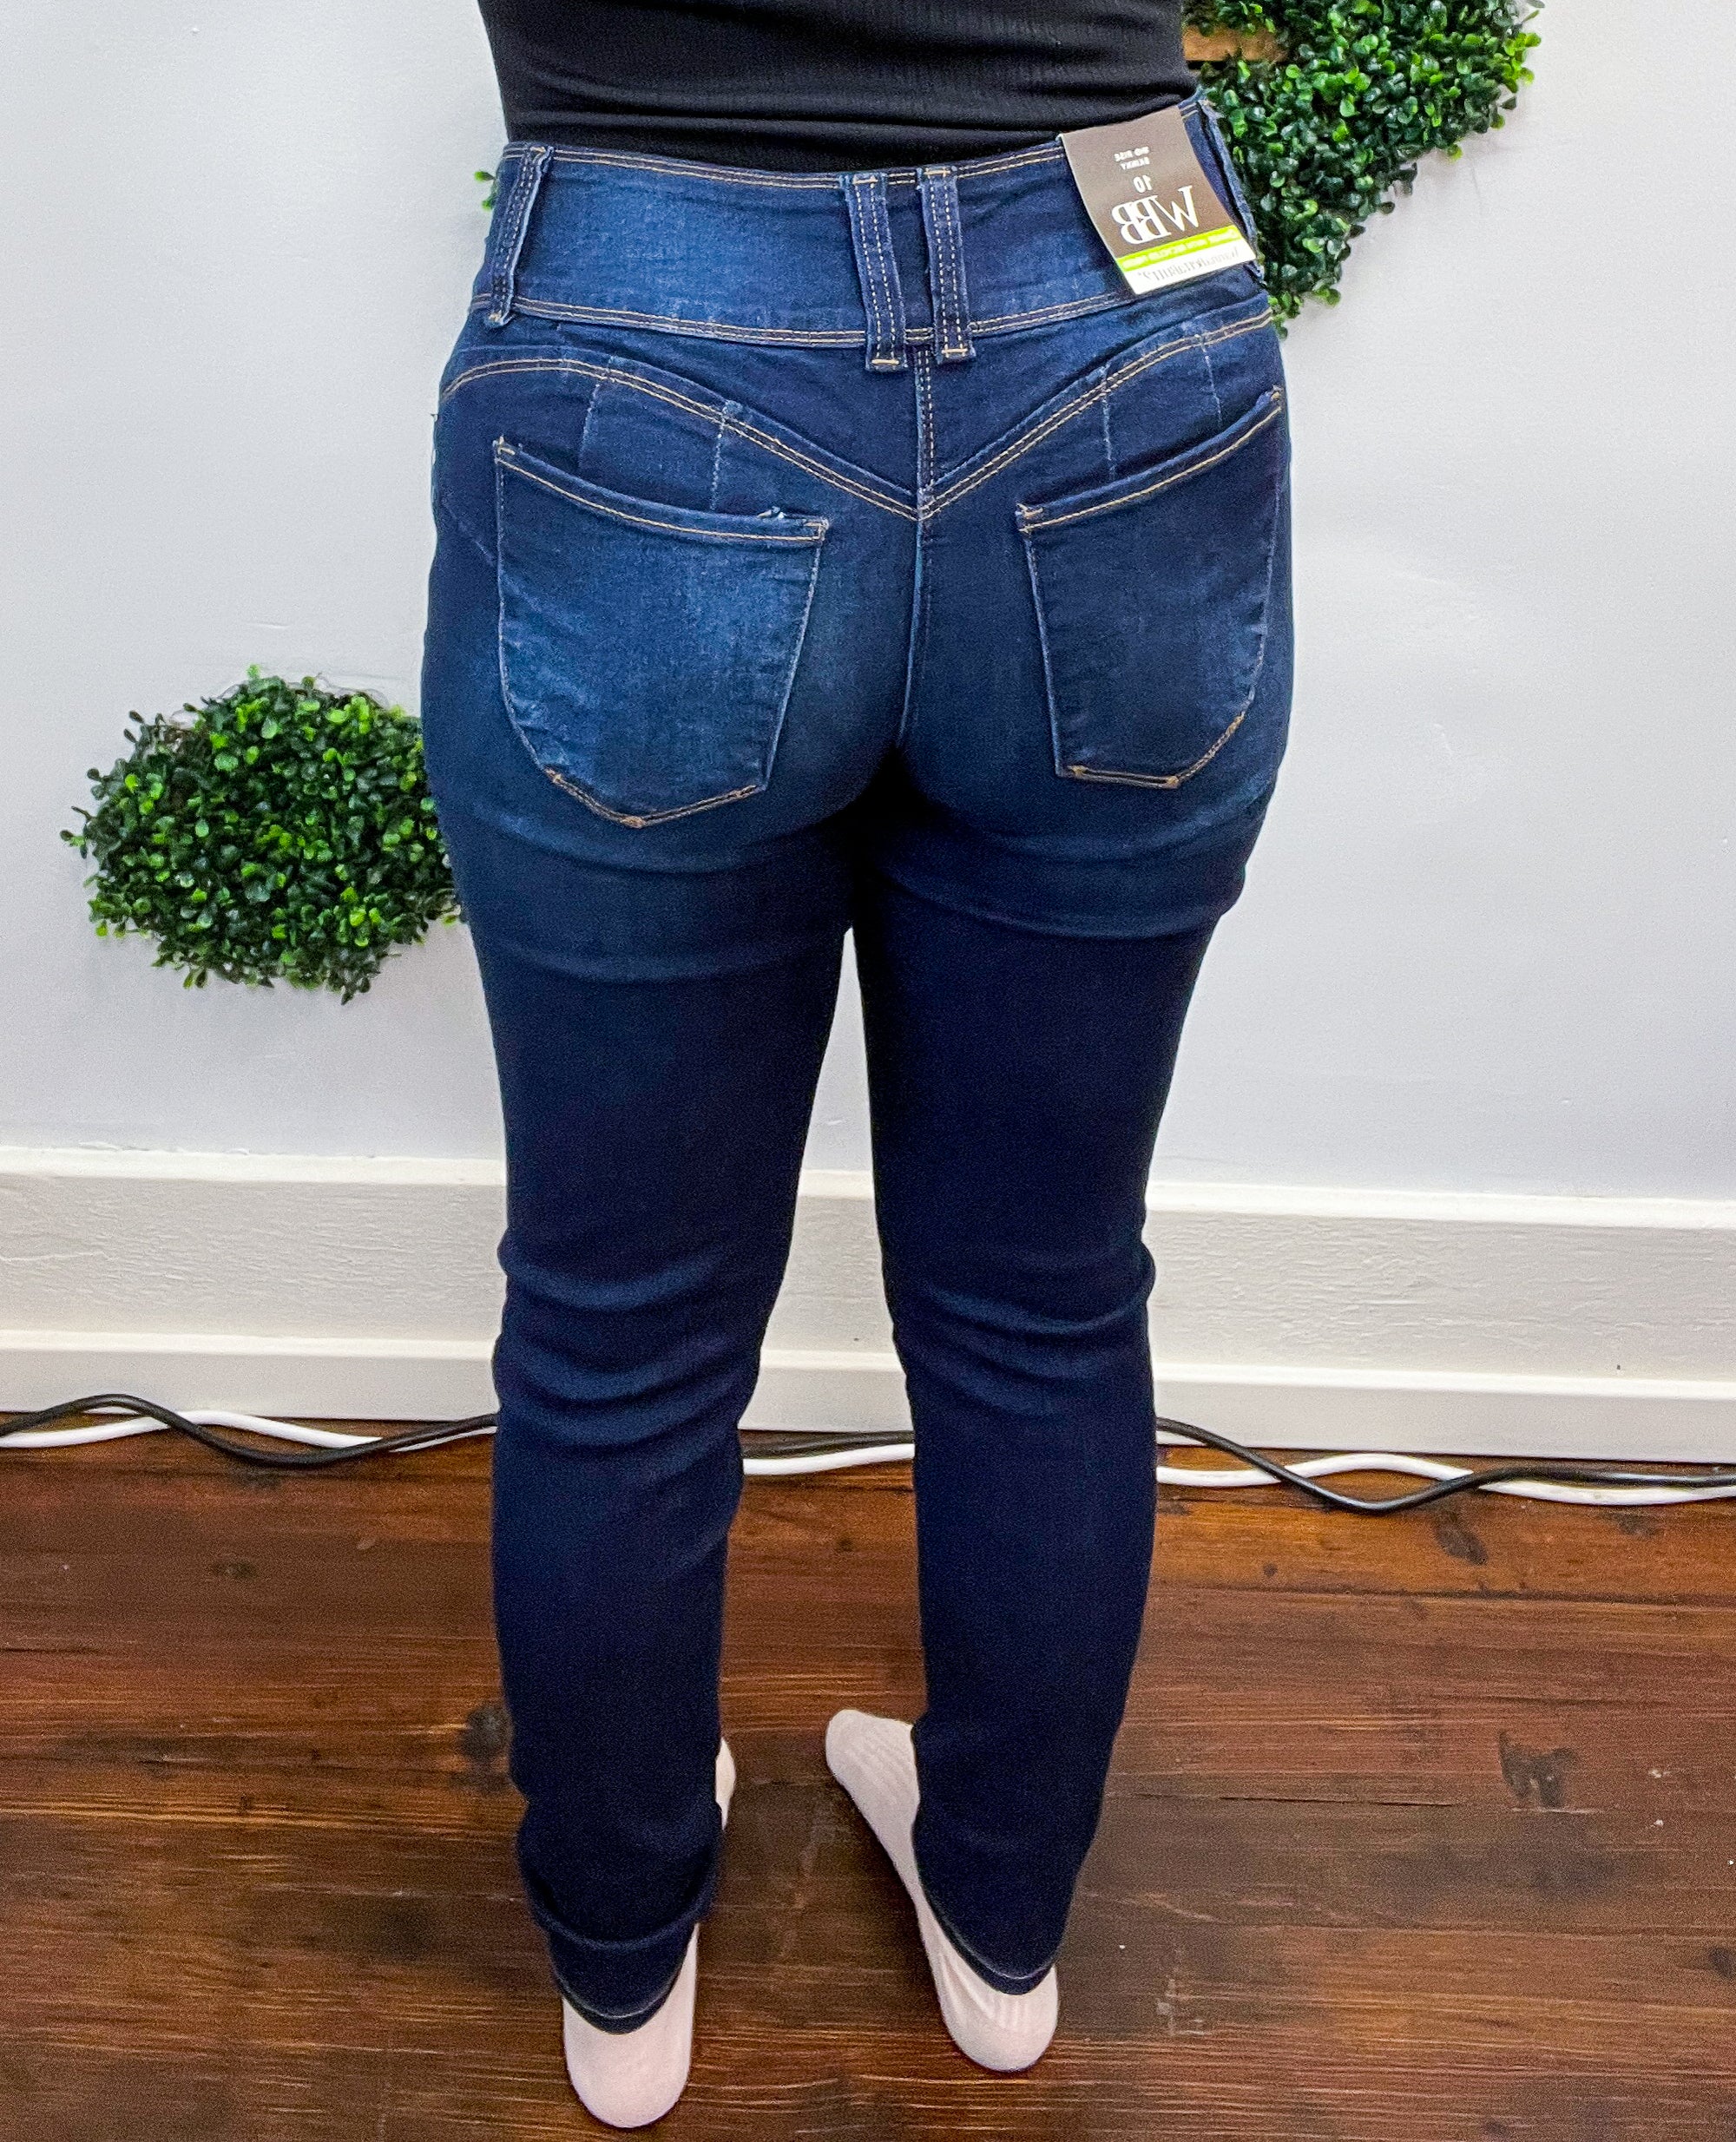 Mid Rise WannaBettaButt 3 Button Distressed Tummy Control Skinny Jeans by RFM  - Dark Wash